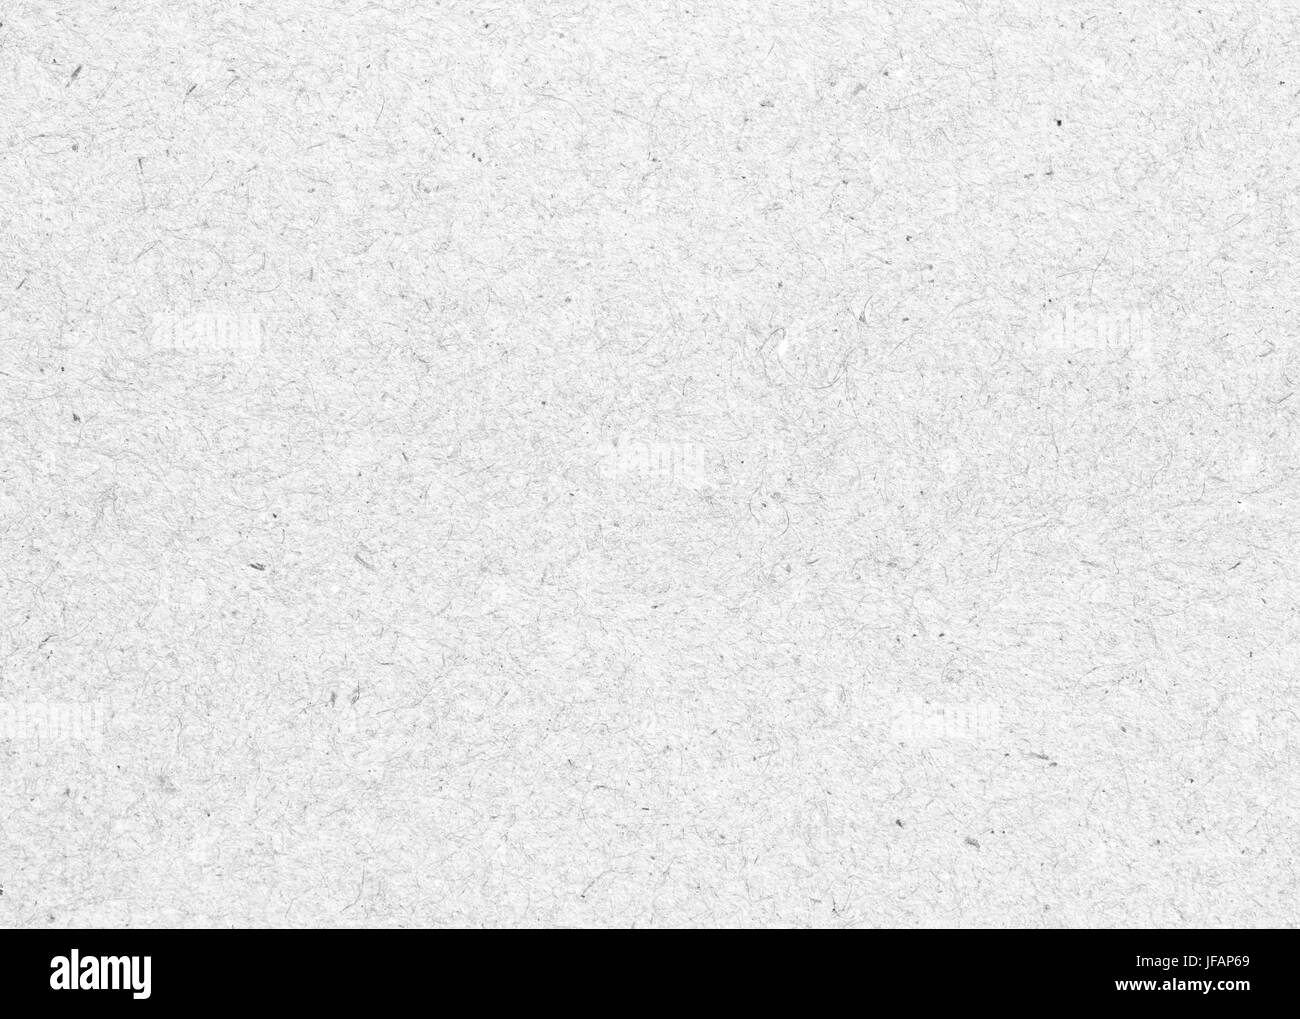 Textura de papel blanco fotografías e imágenes de alta resolución - Alamy